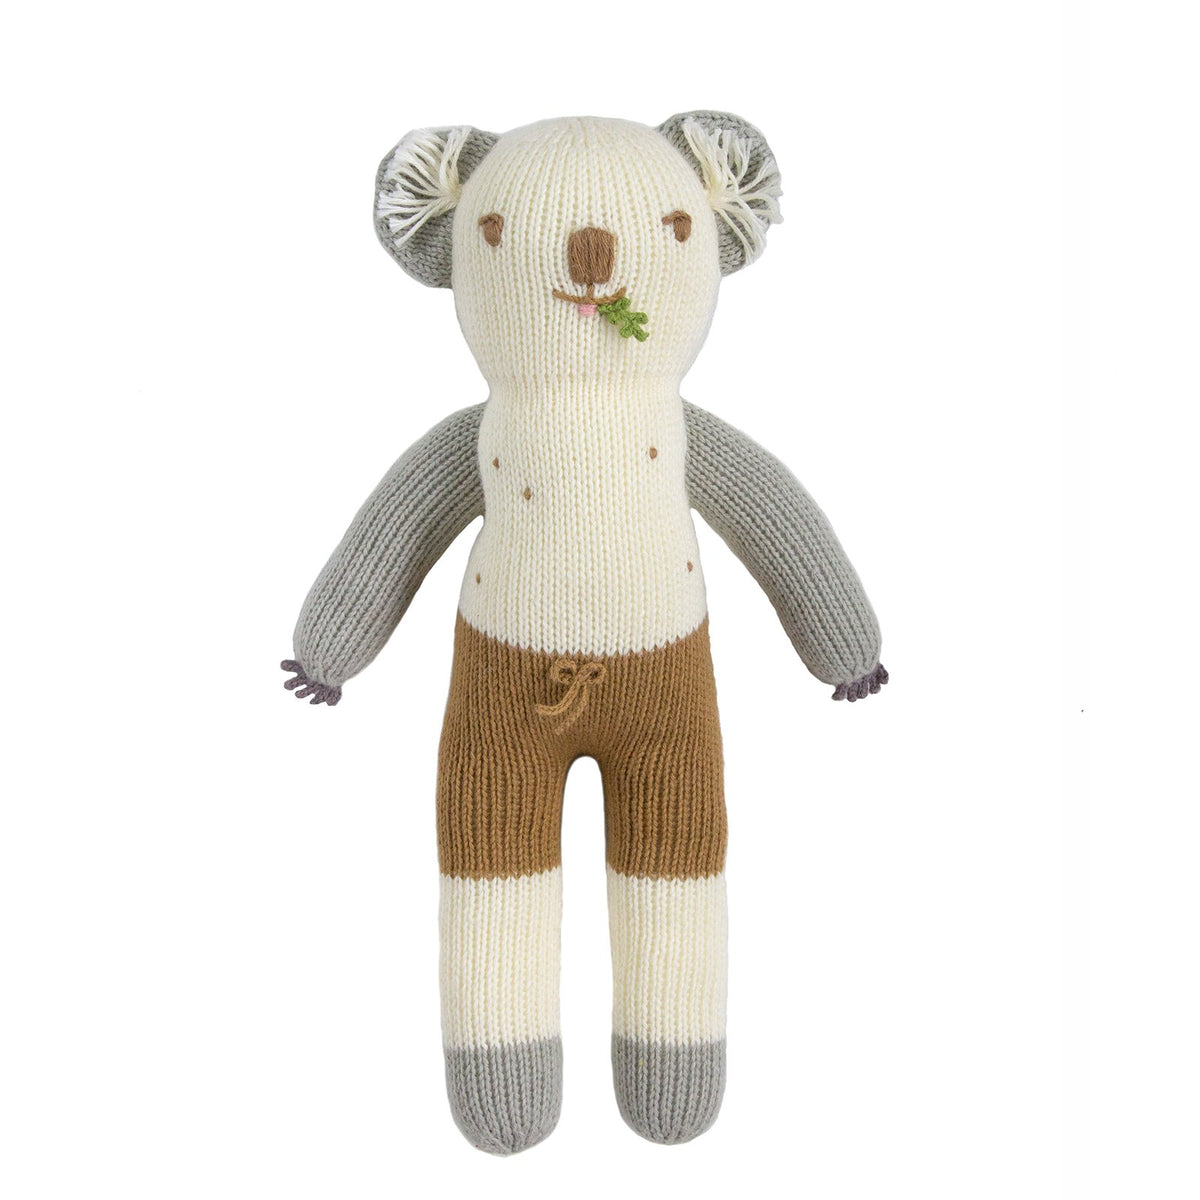 Blabla Knit Doll, Koa the Koala - Regular Size